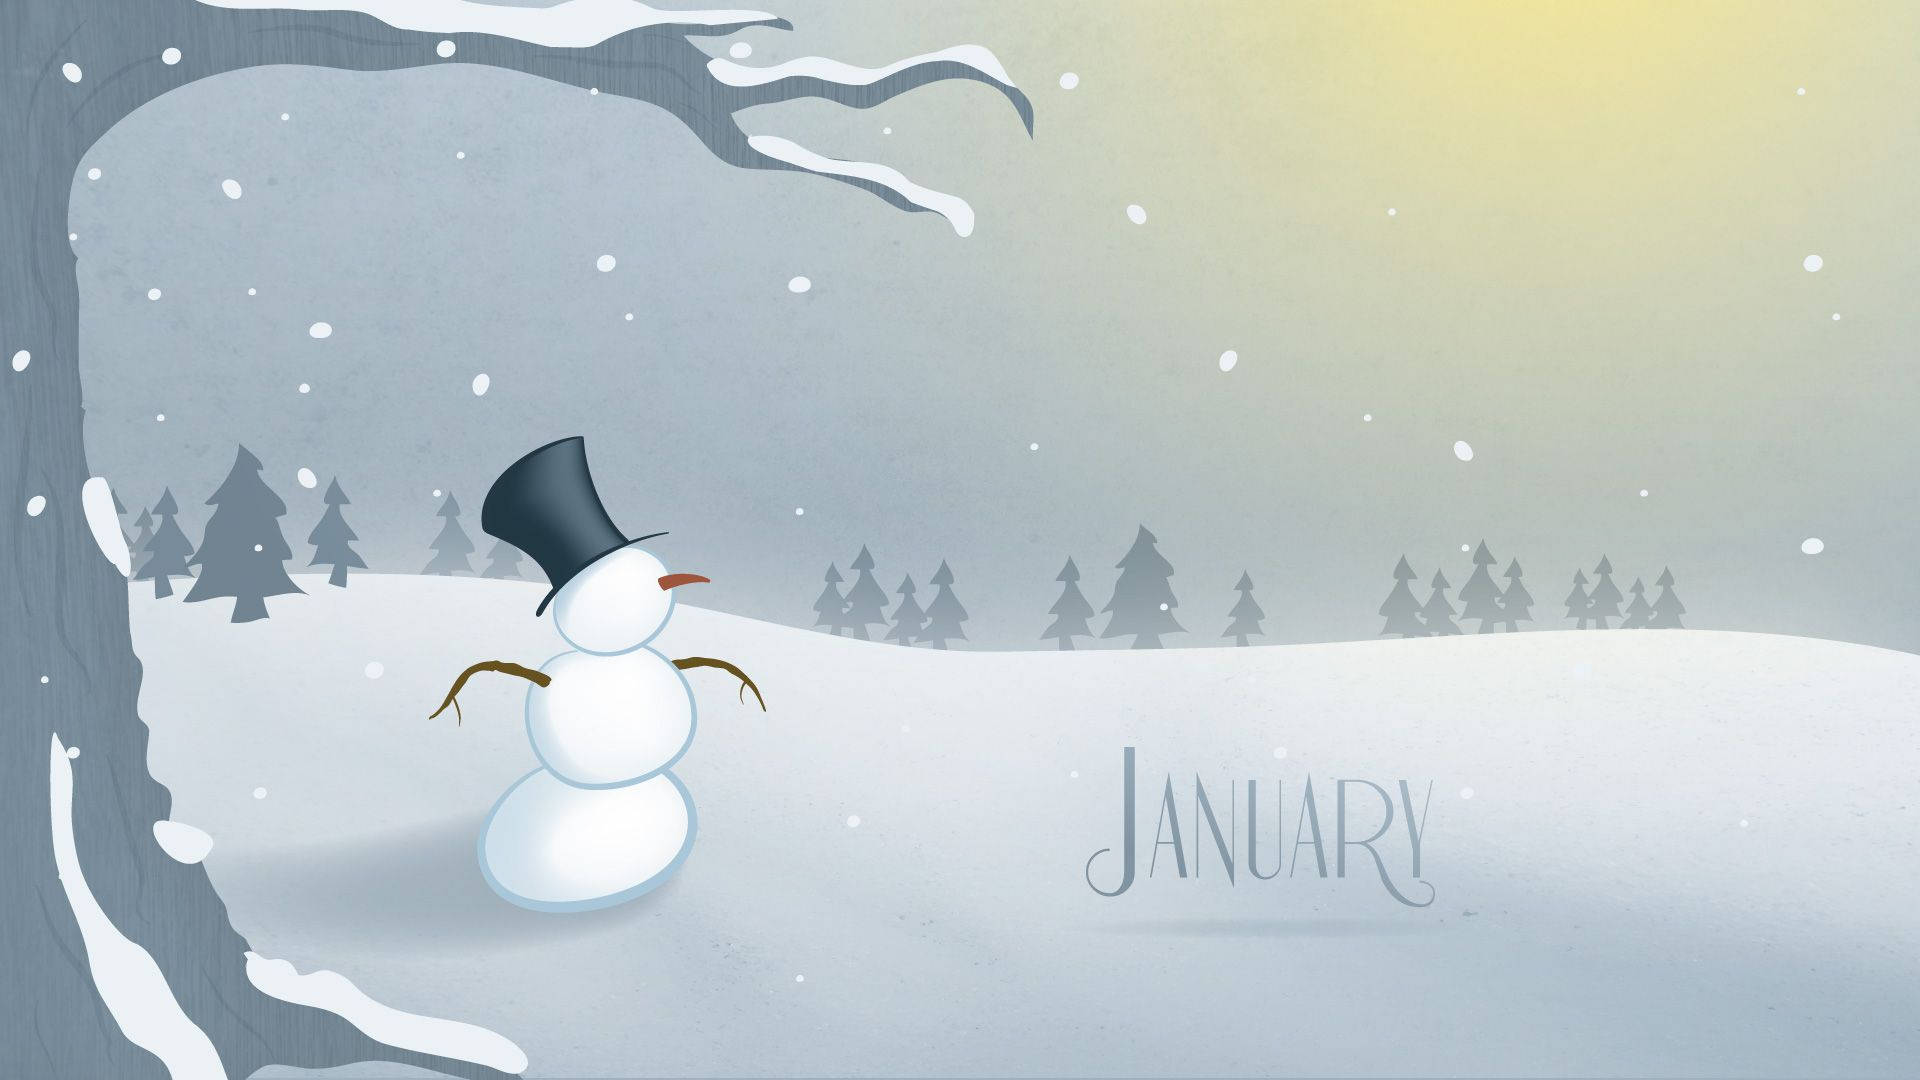 January Snowman Cartoon Wallpaper